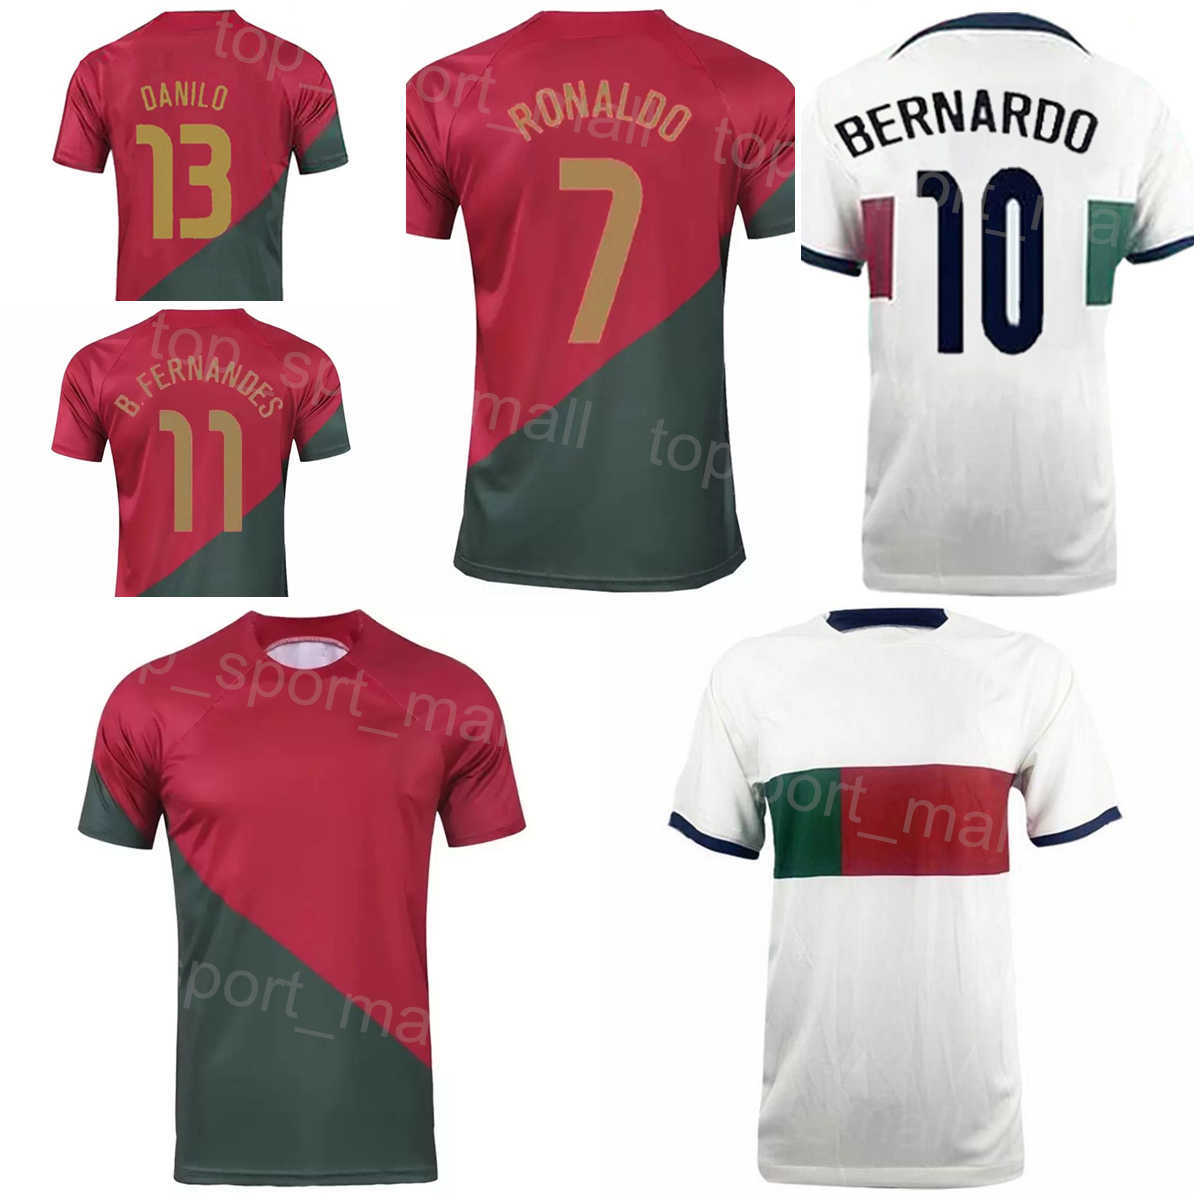 

2022 World Cup Soccer Cristiano Ronaldo Jerseys National Team DIOGO J ANDRE SILVA BERNARDO FERNANDES WILLIAM PEREIRA JOAO CANCELO Football Shirt Kits PuTaoYa, With patch